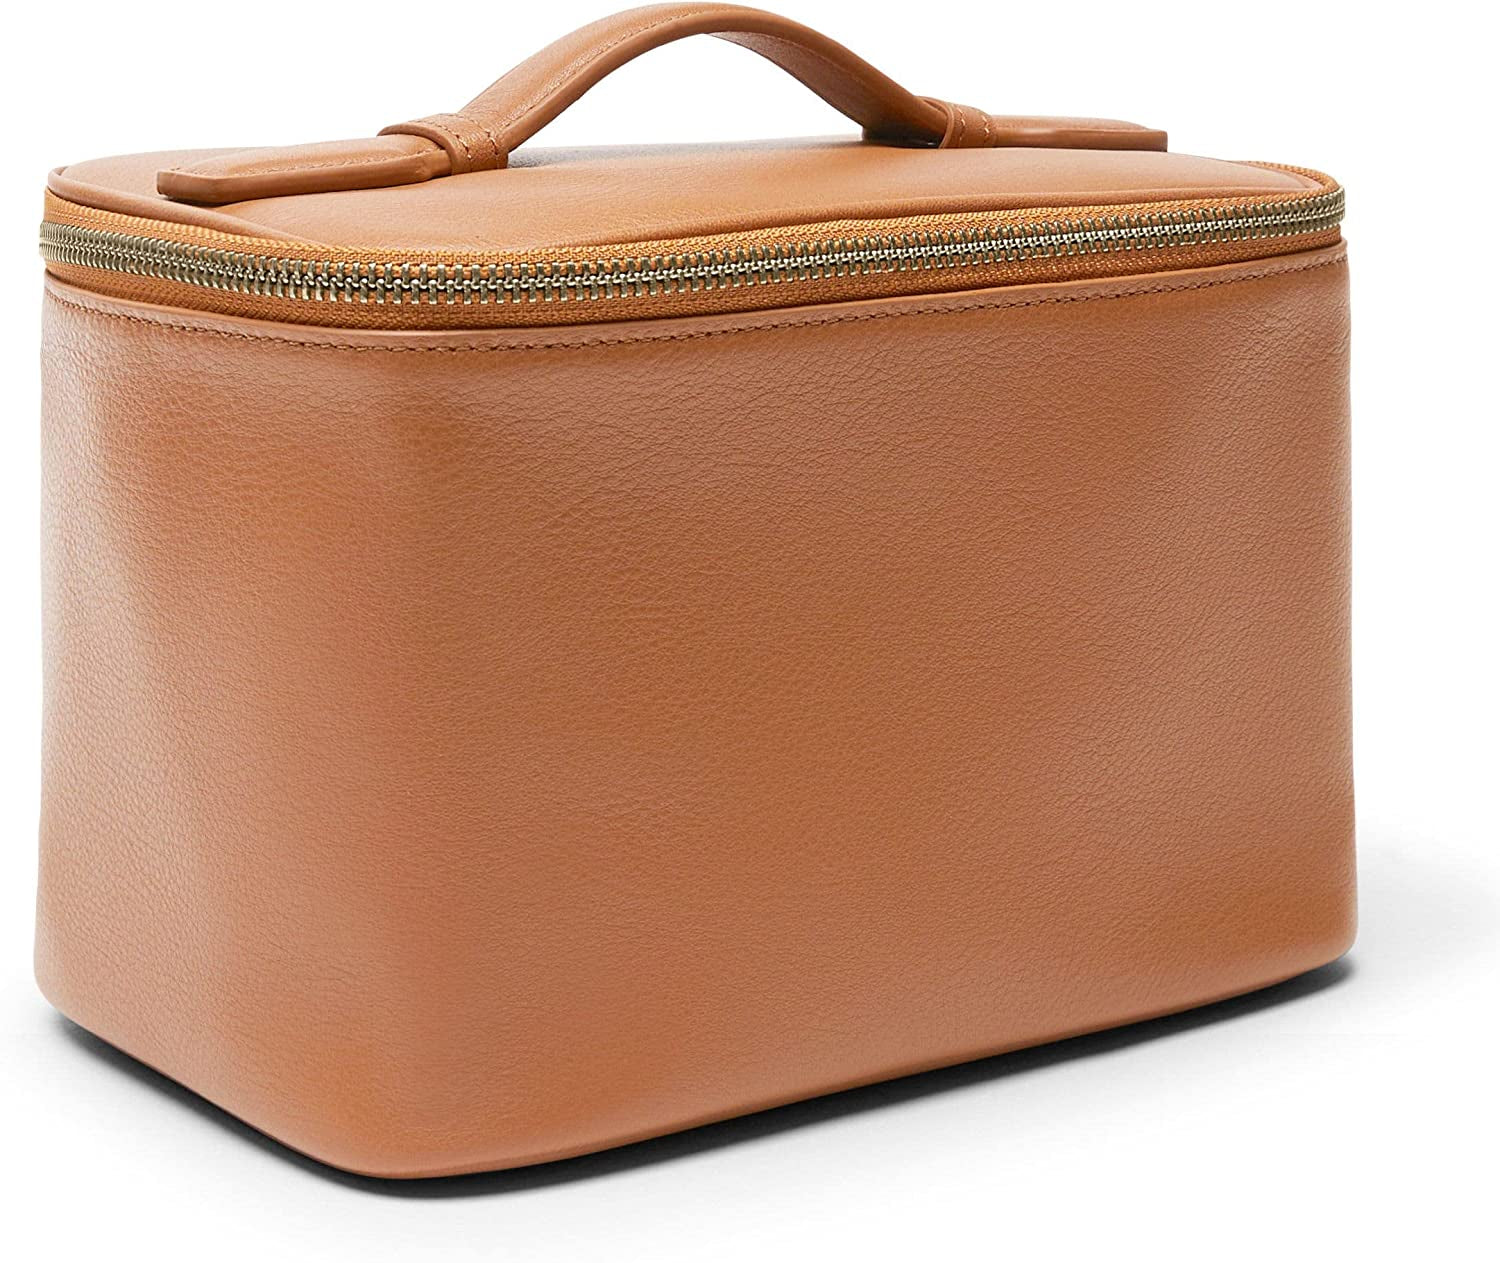 Leatherology Cognac Top Handle Medium Train Case Cosmetic Makeup Bag Organizer for Women